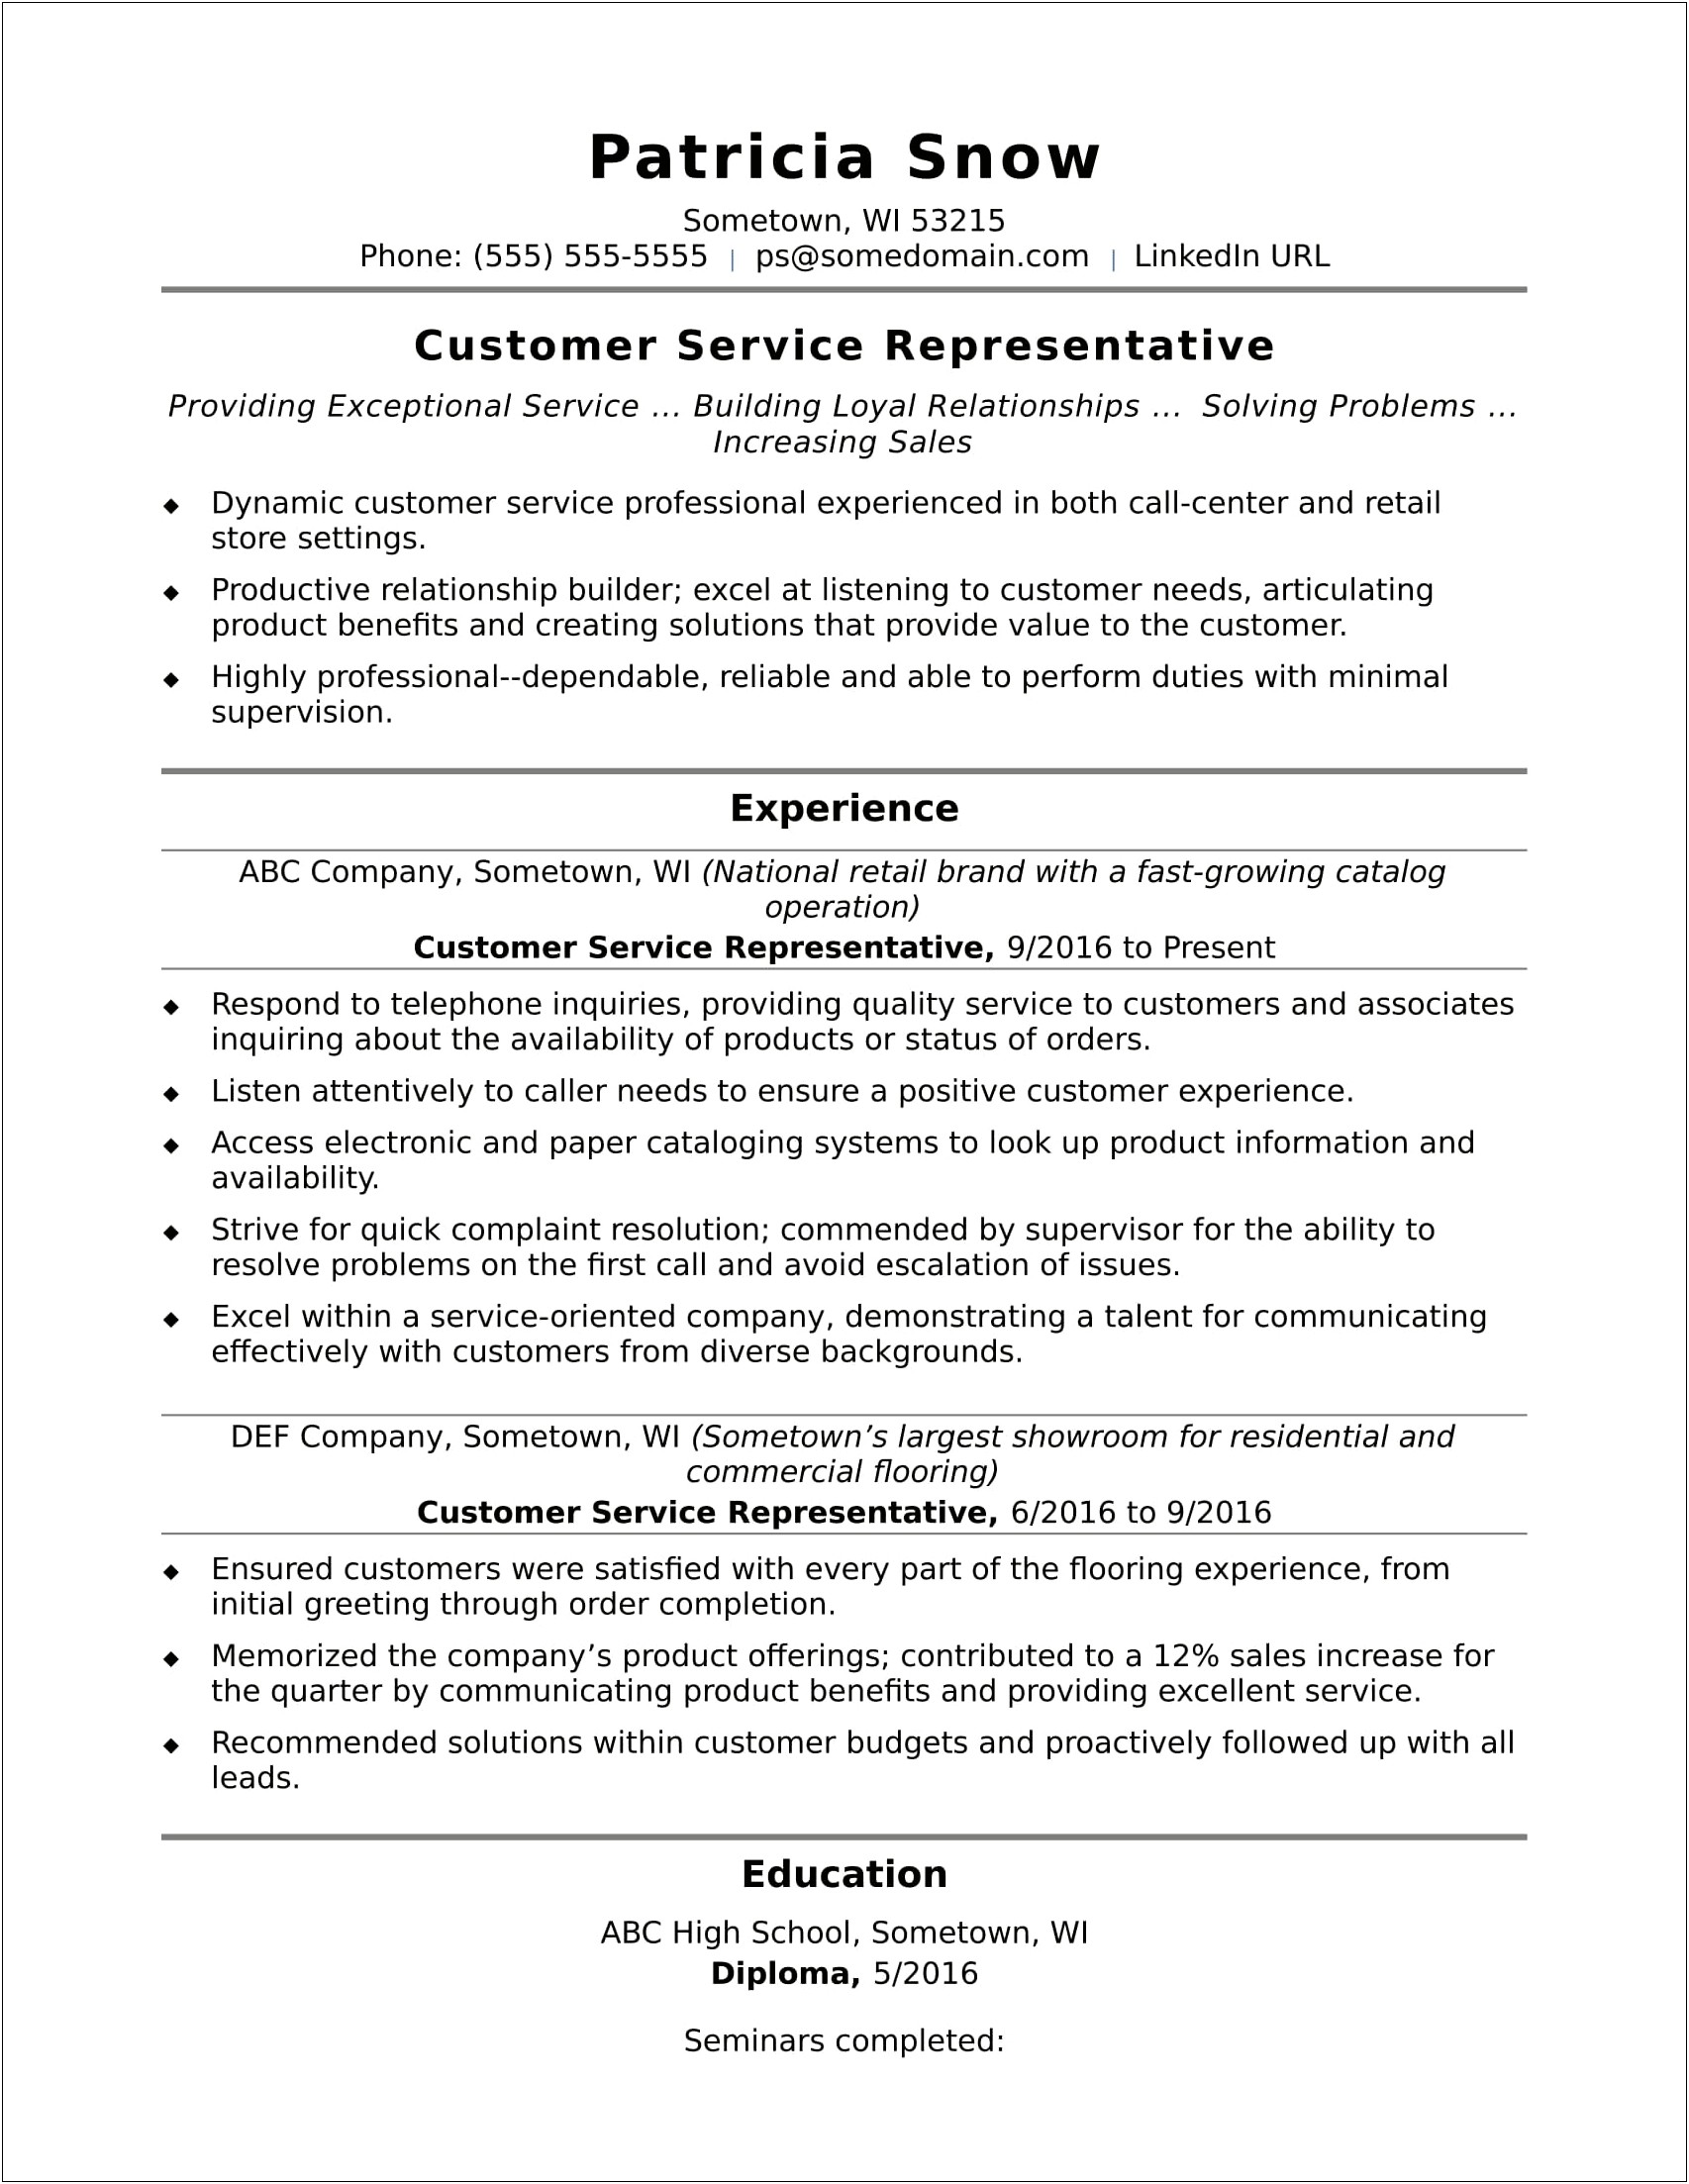 Patient Access Representative Job Description For Resume